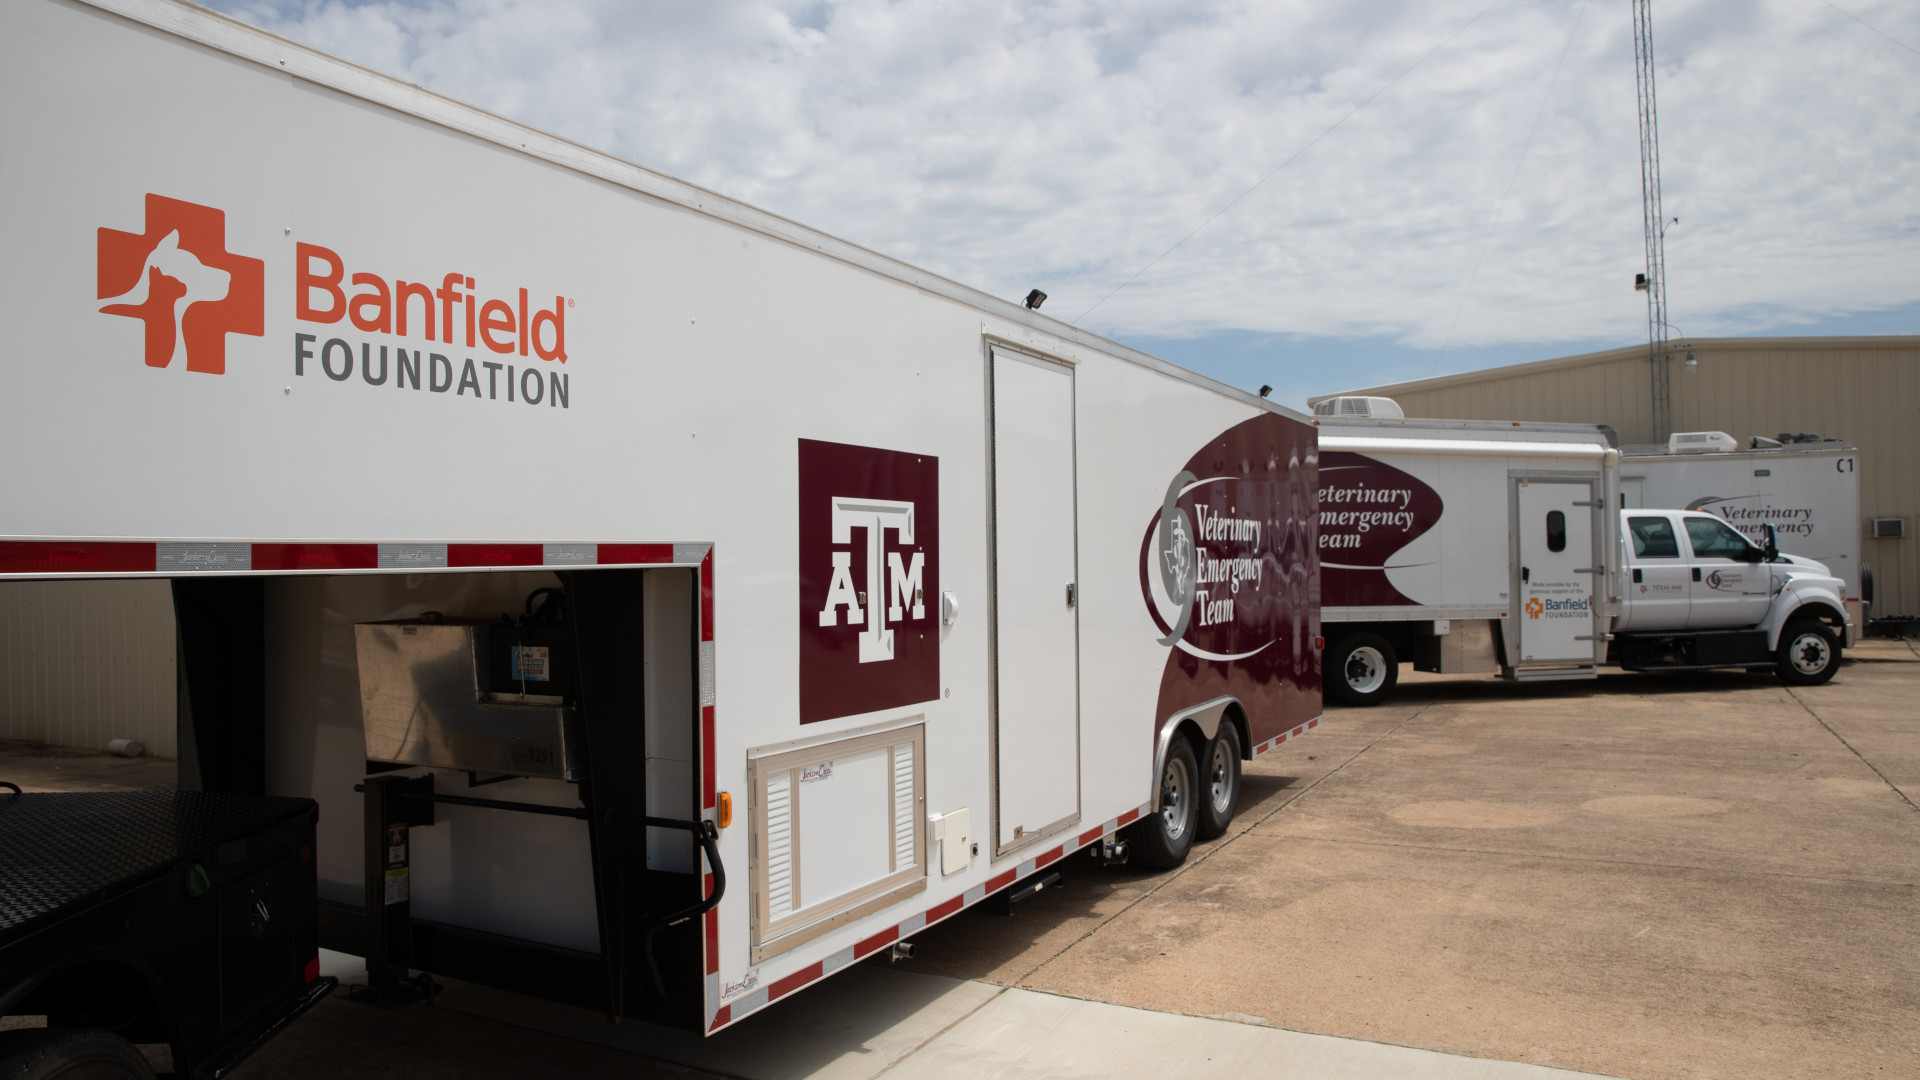 the texas a&m mobile vet truck